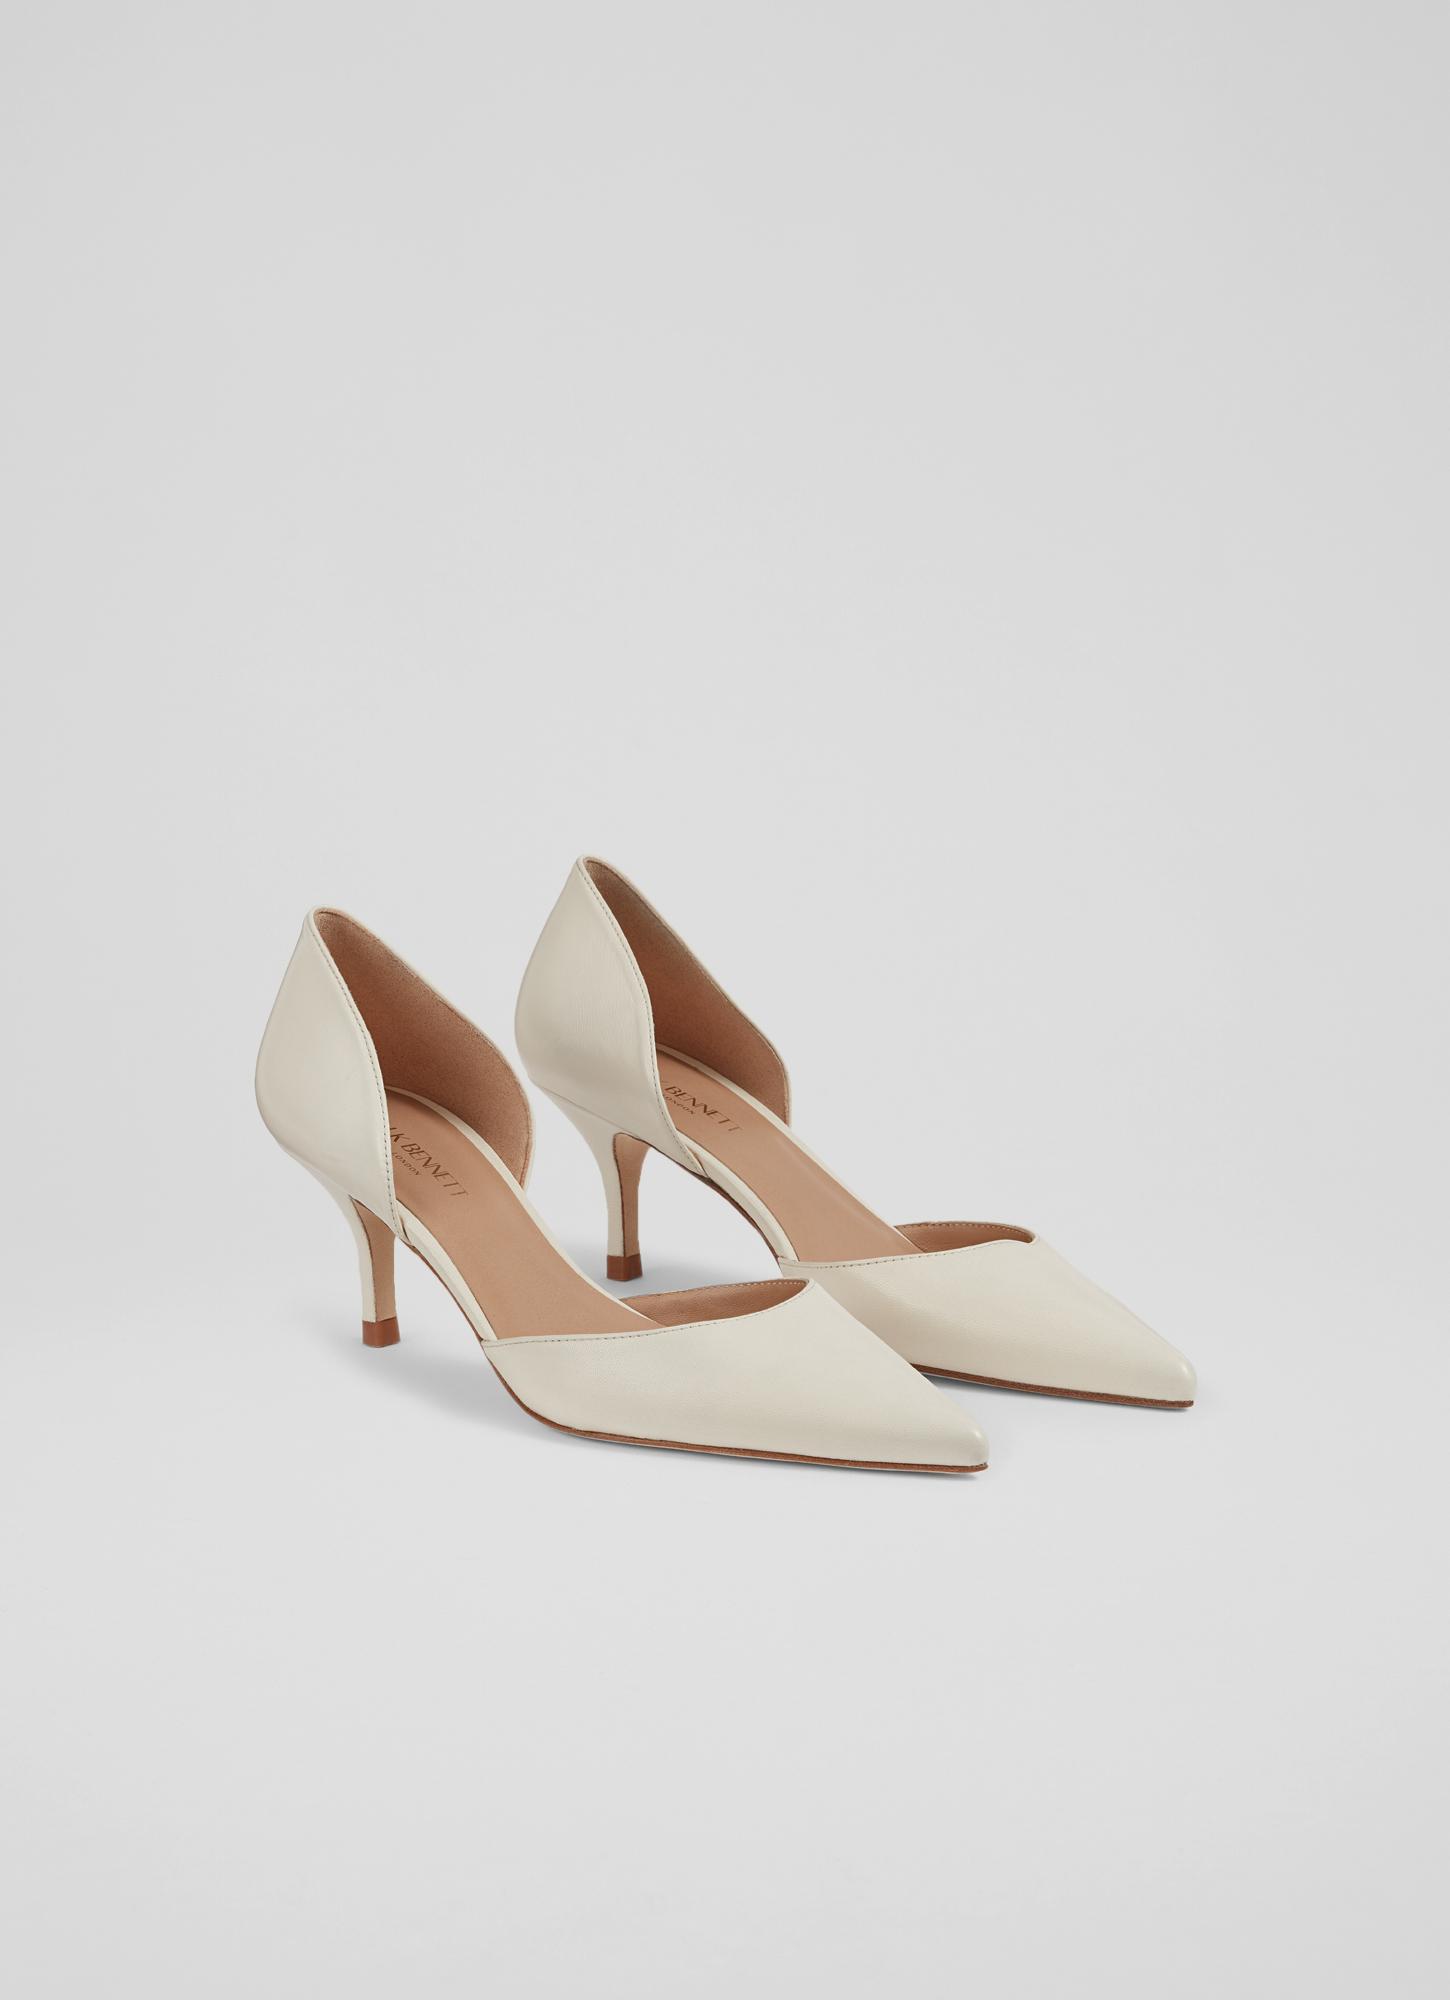 Women's Court Shoes |Le Babe 1272 72 | Thomas Patrick Grafton Street